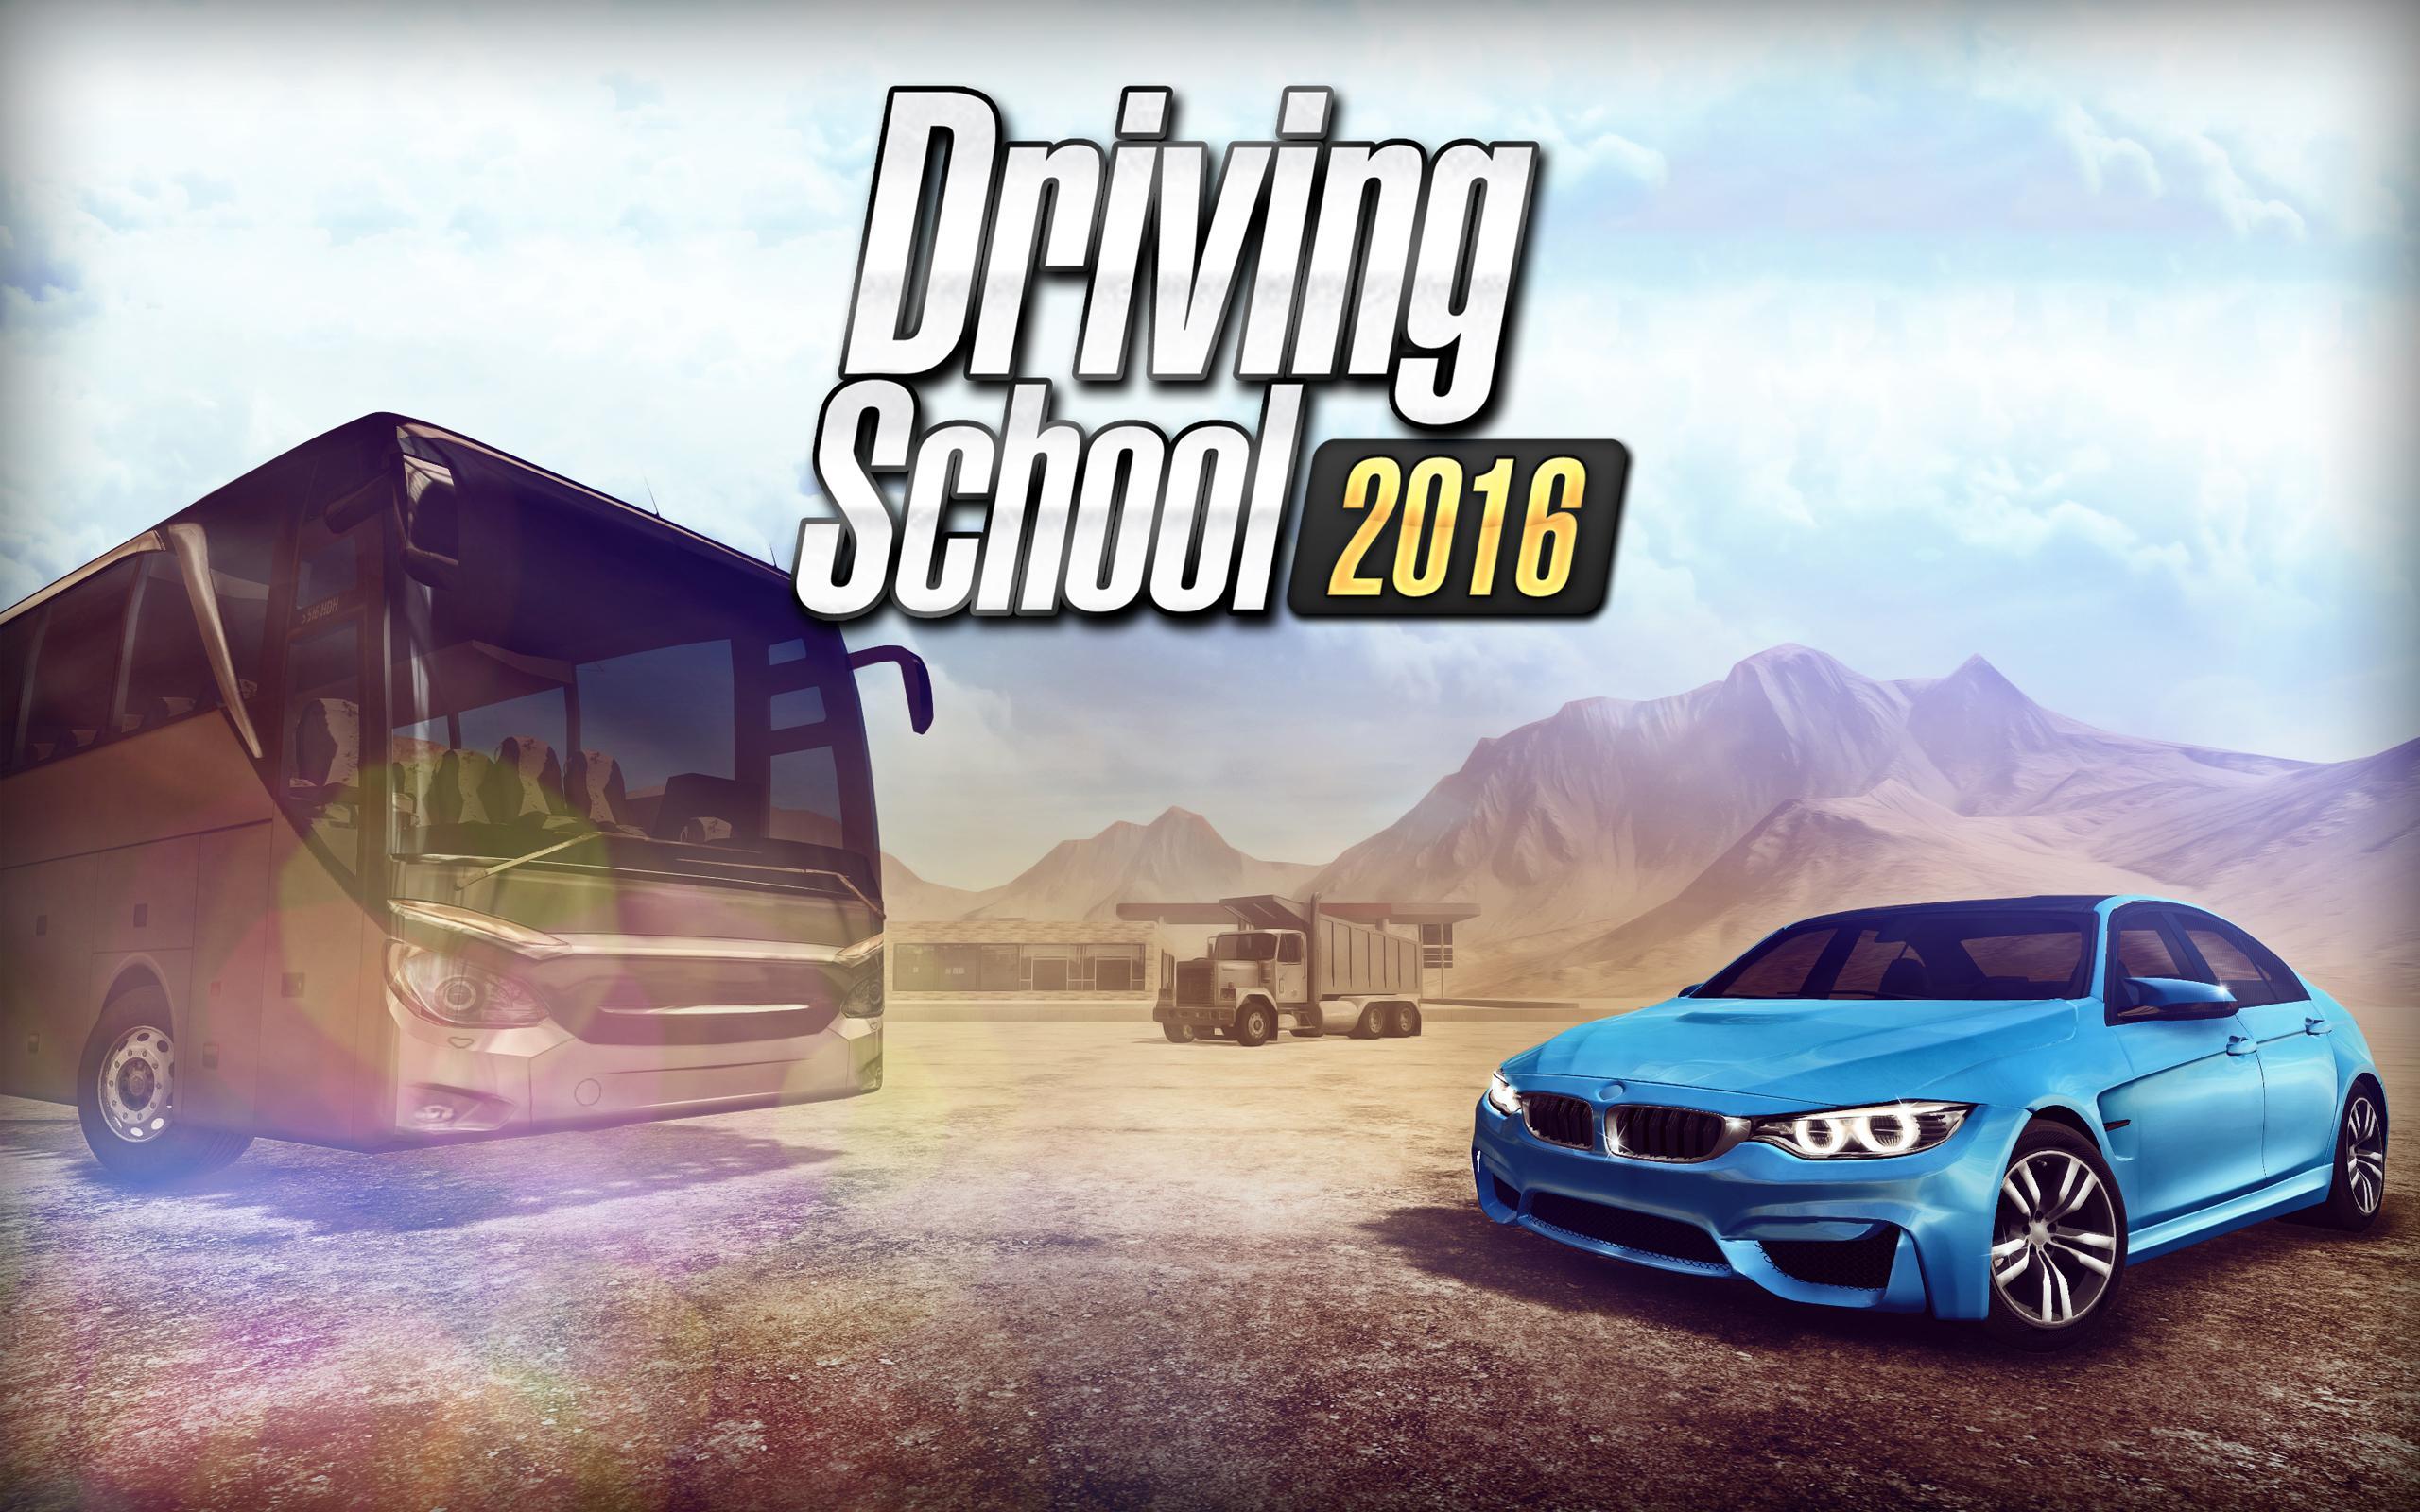 Driving School 2016 3.1 Screenshot 7